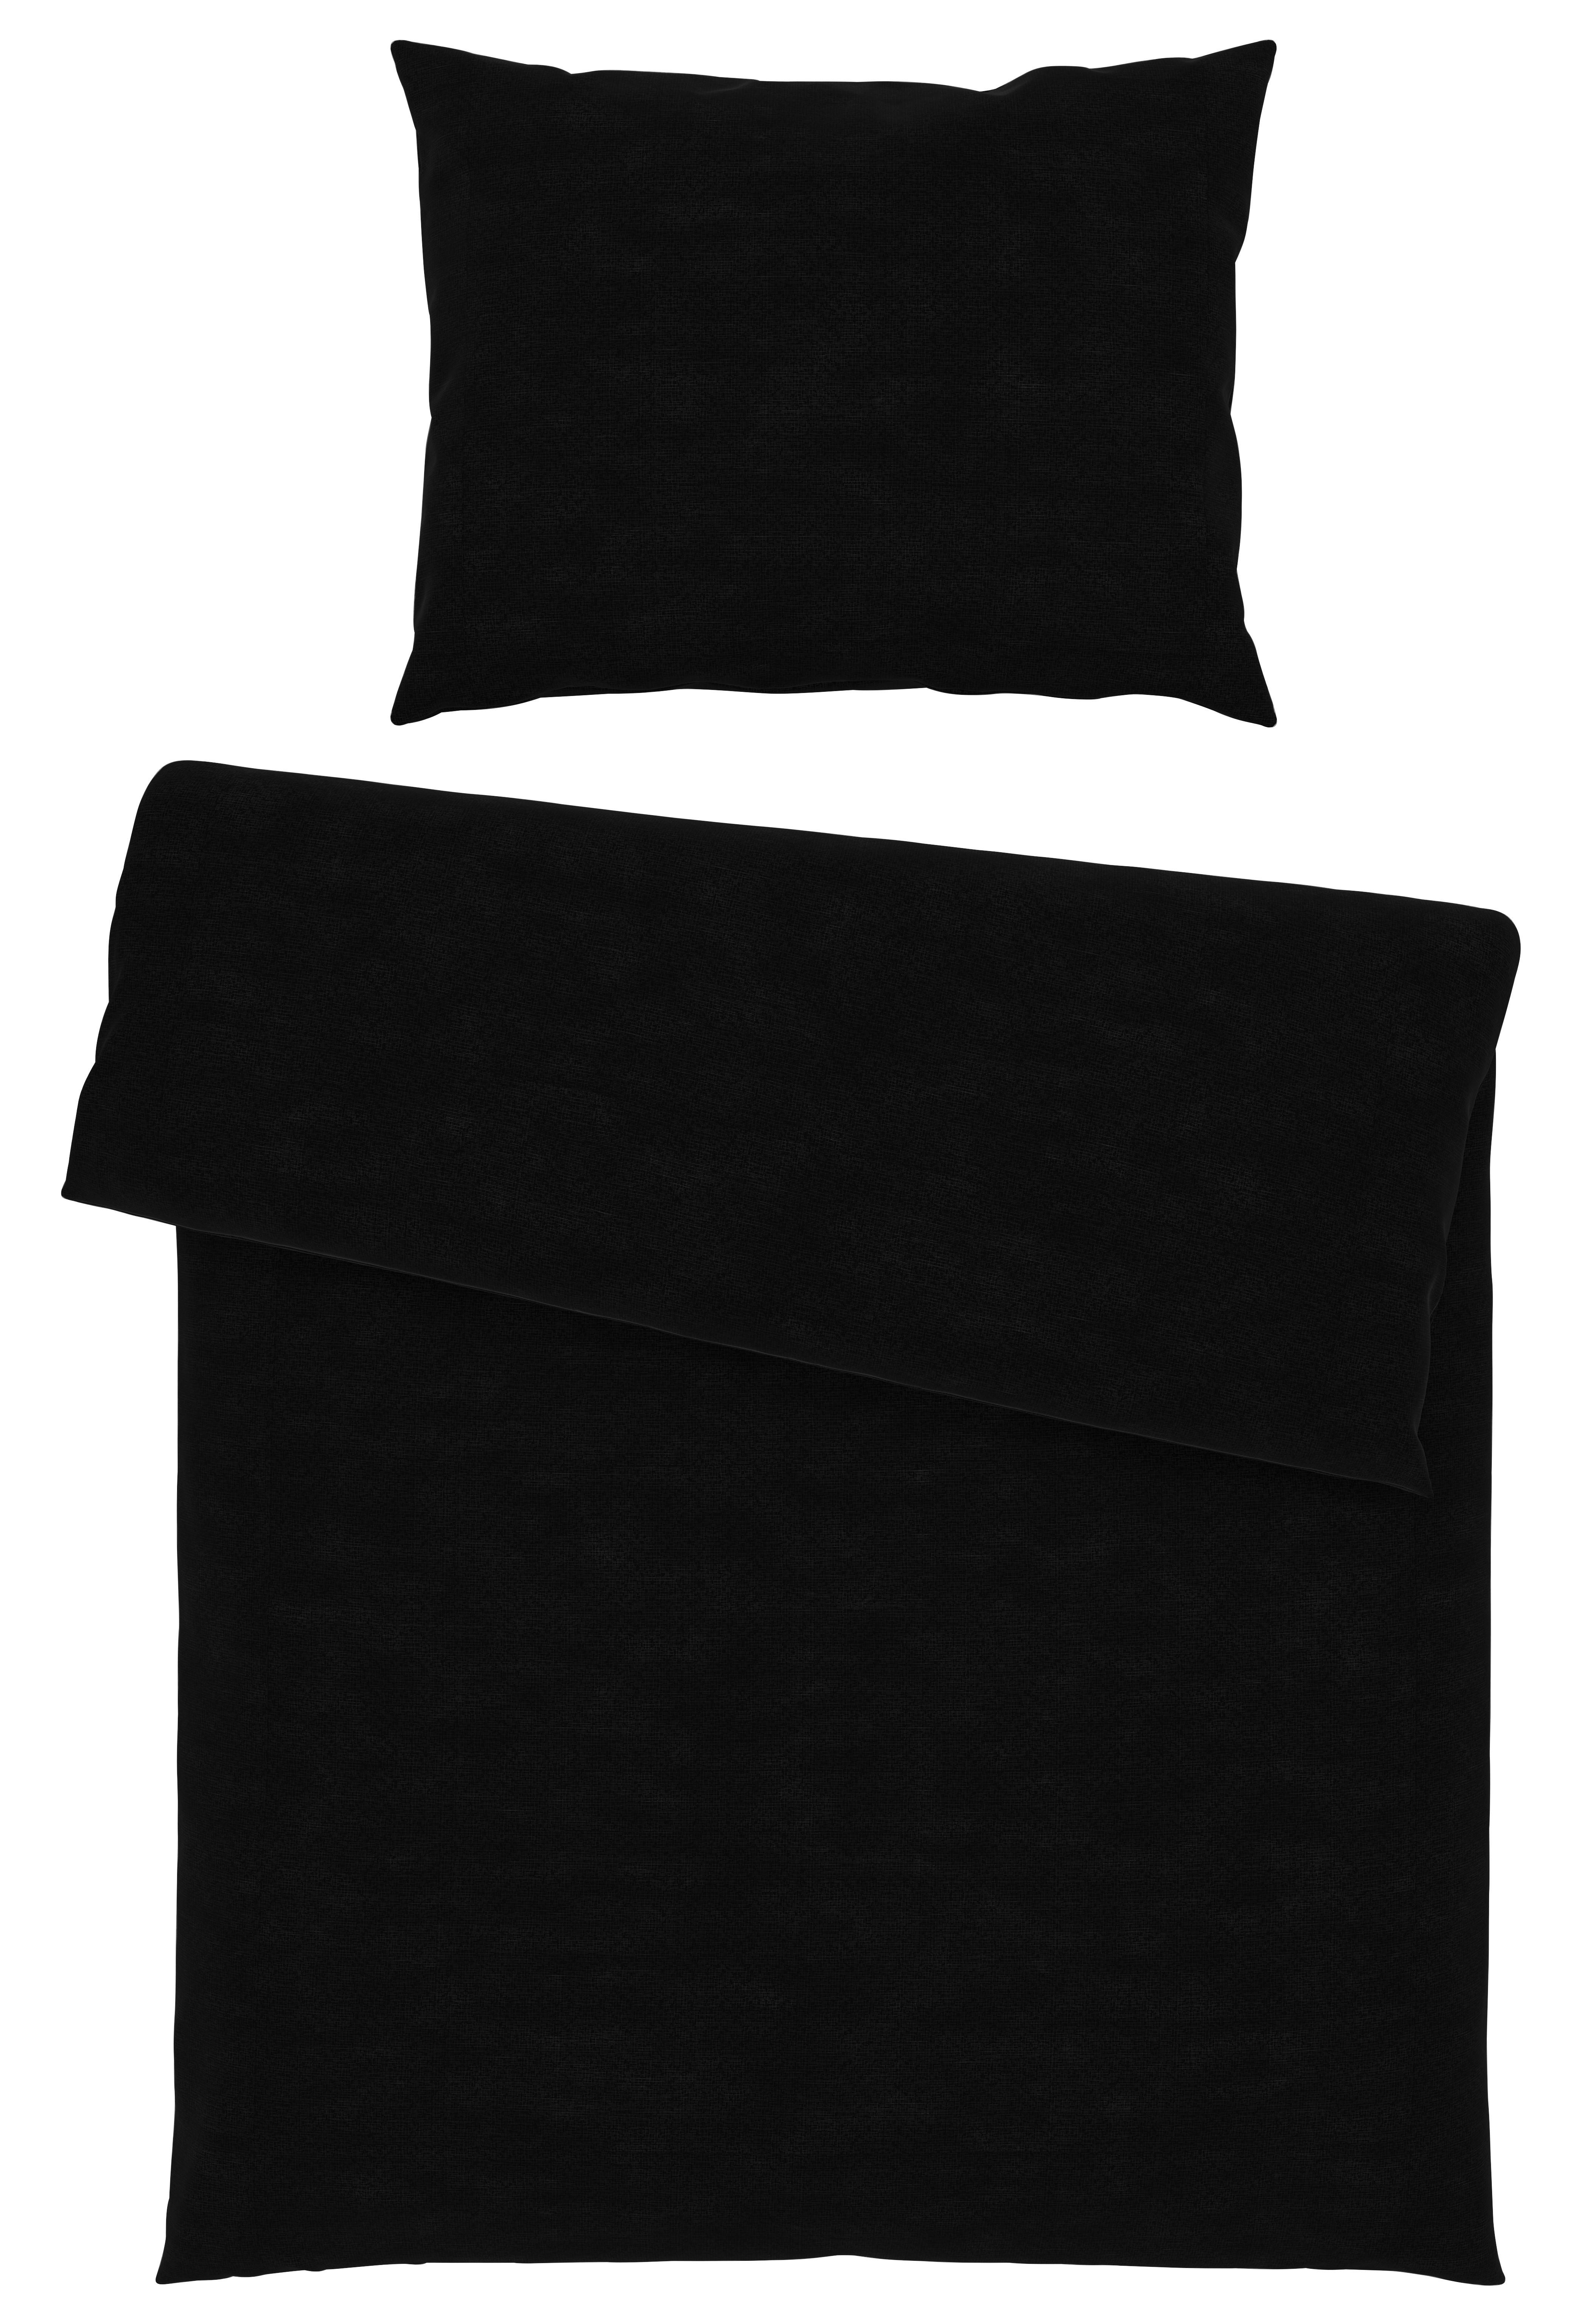 Posteljnina Iris - črna, Moderno, tekstil (140/200cm) - Modern Living